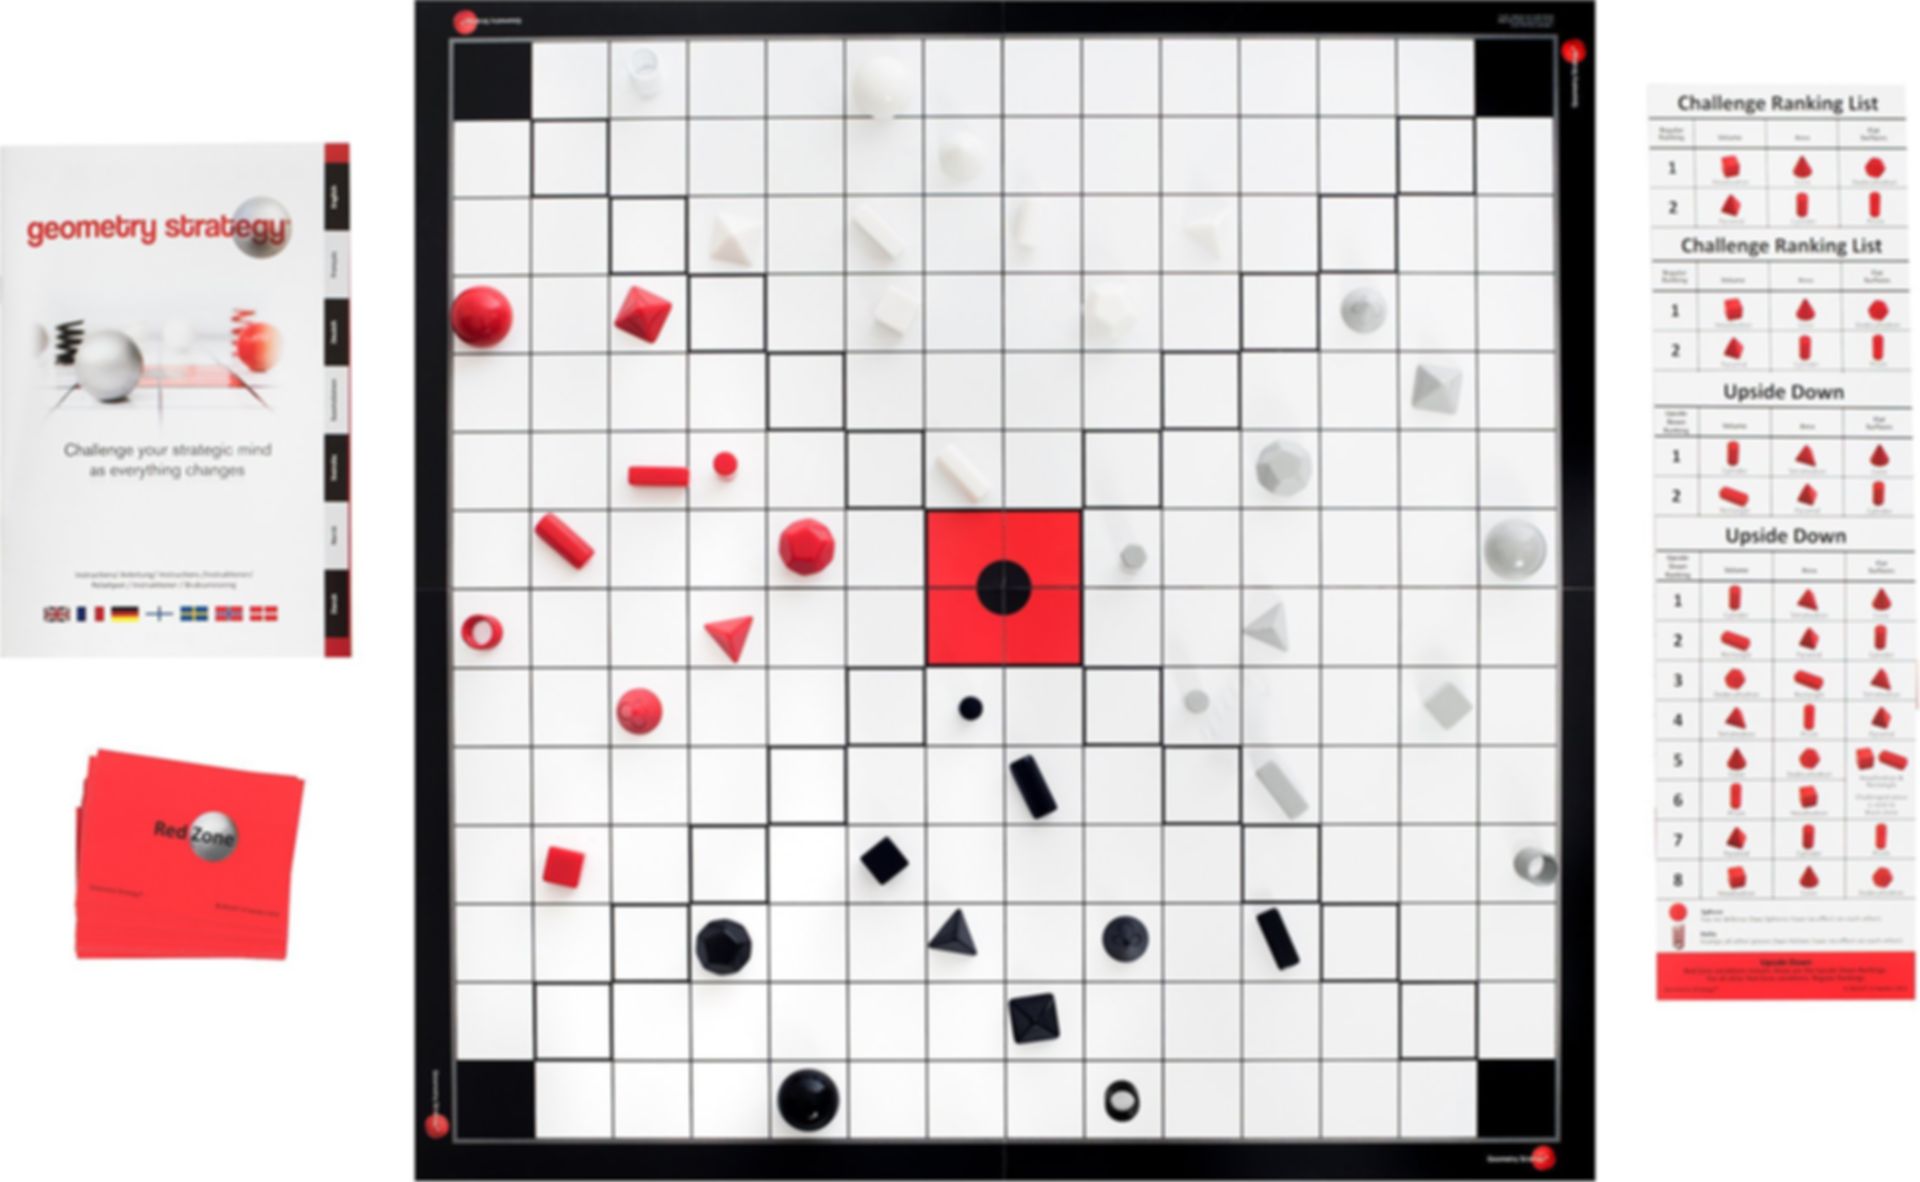 Geometry Strategy gameplay